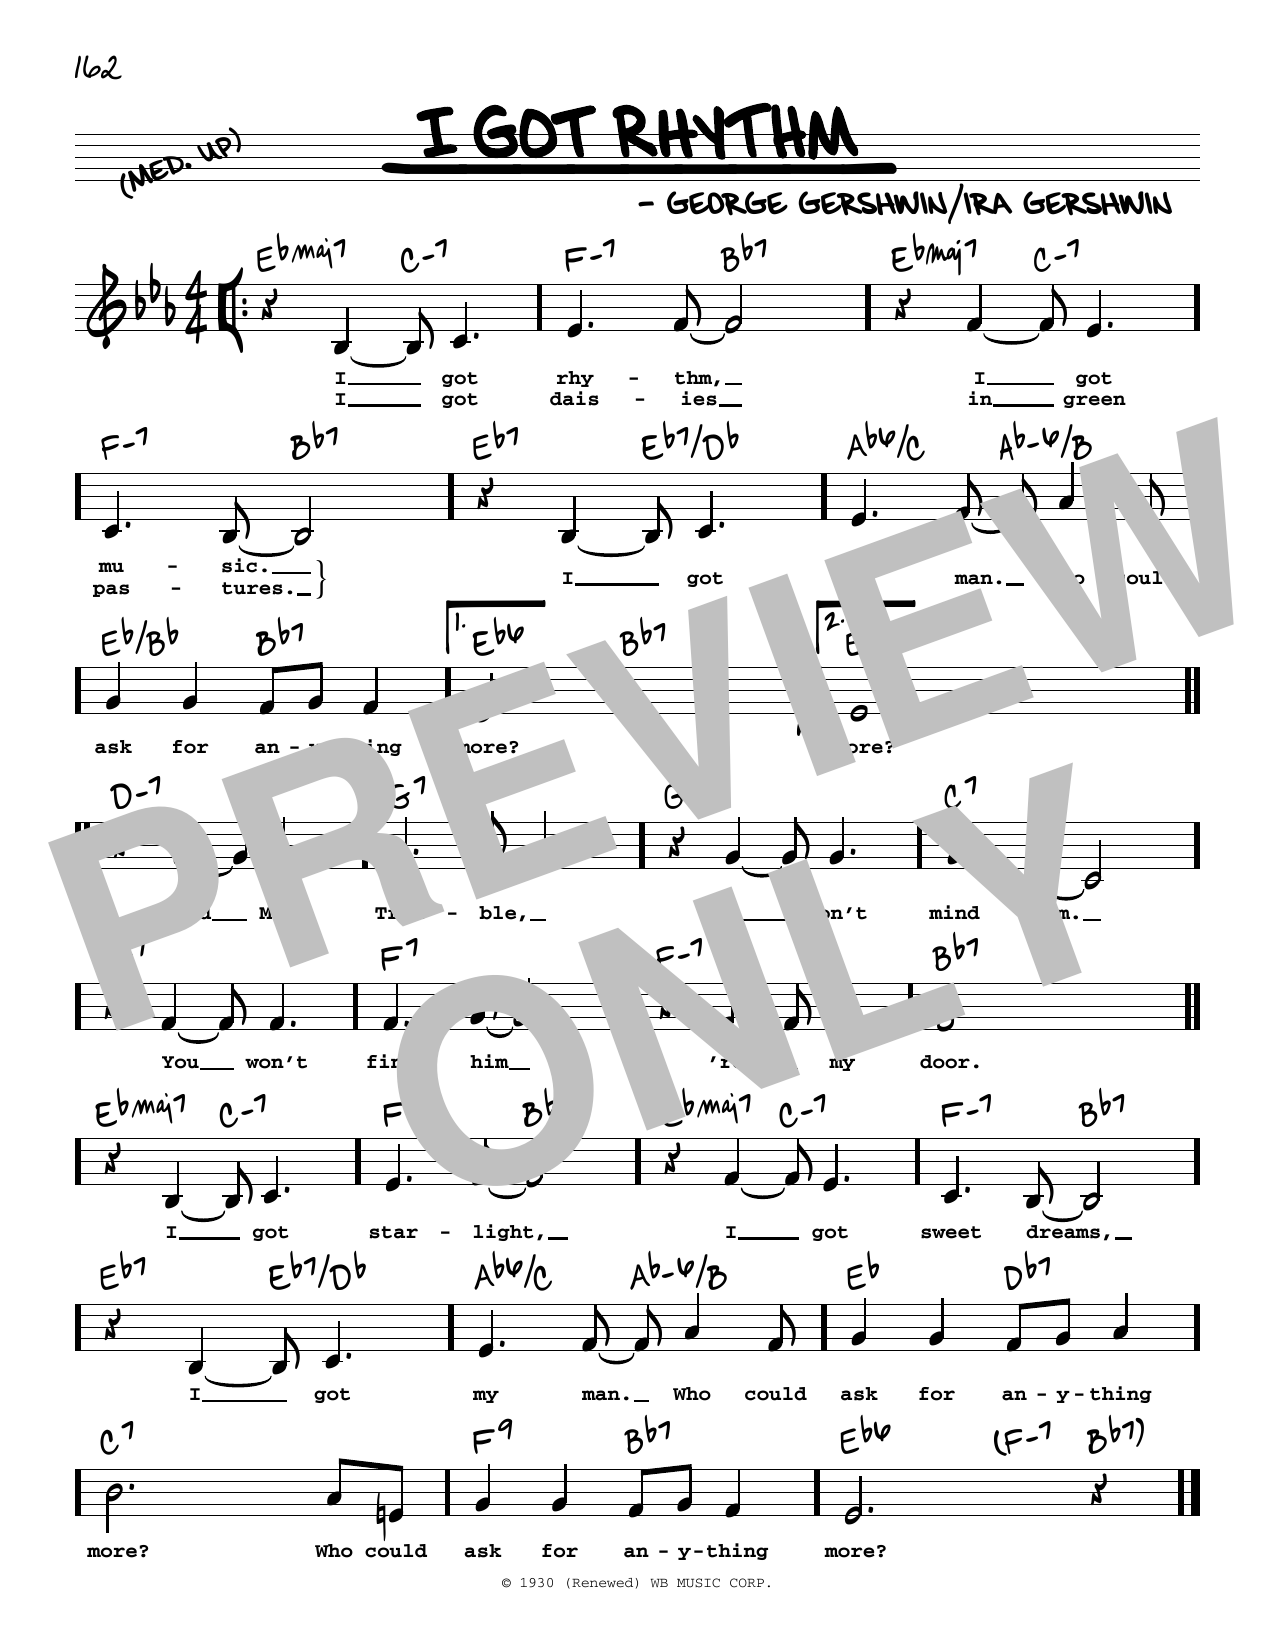 George Gershwin & Ira Gershwin I Got Rhythm (Low Voice) Sheet Music Notes & Chords for Real Book – Melody, Lyrics & Chords - Download or Print PDF